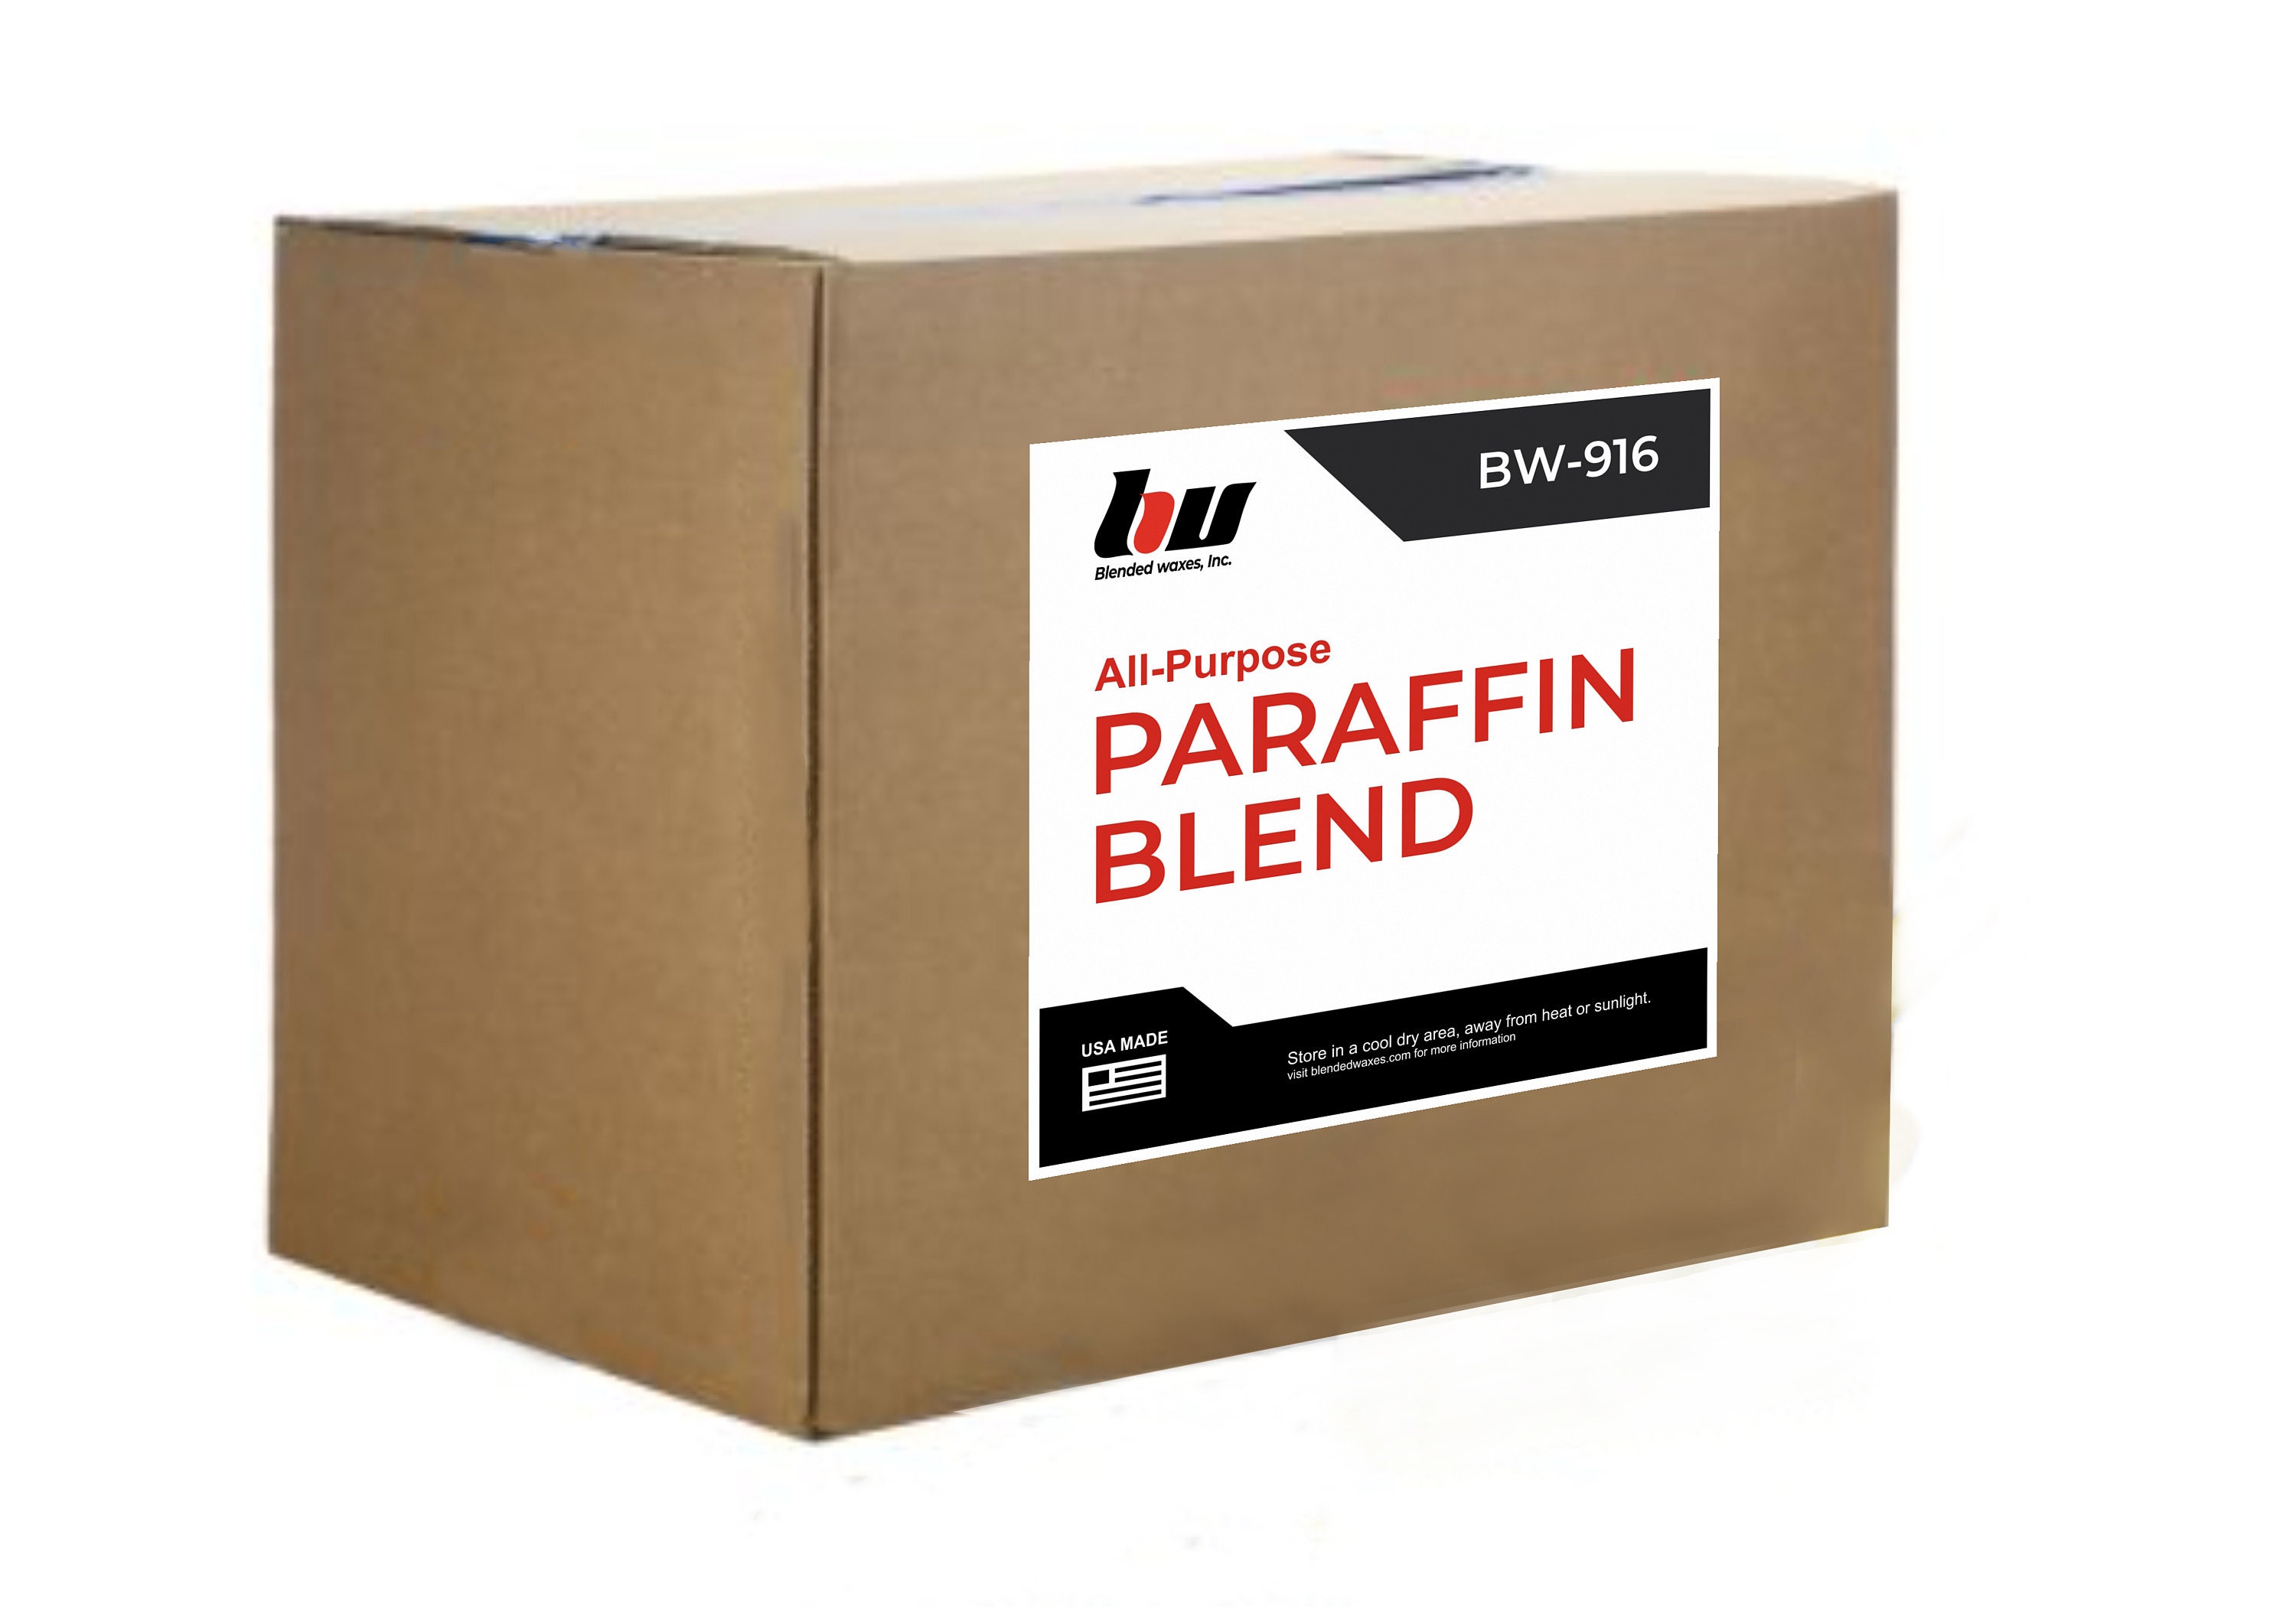 Blended Waxes, Inc. 10 lb. Bag – Low Melt Bulk Paraffin Wax